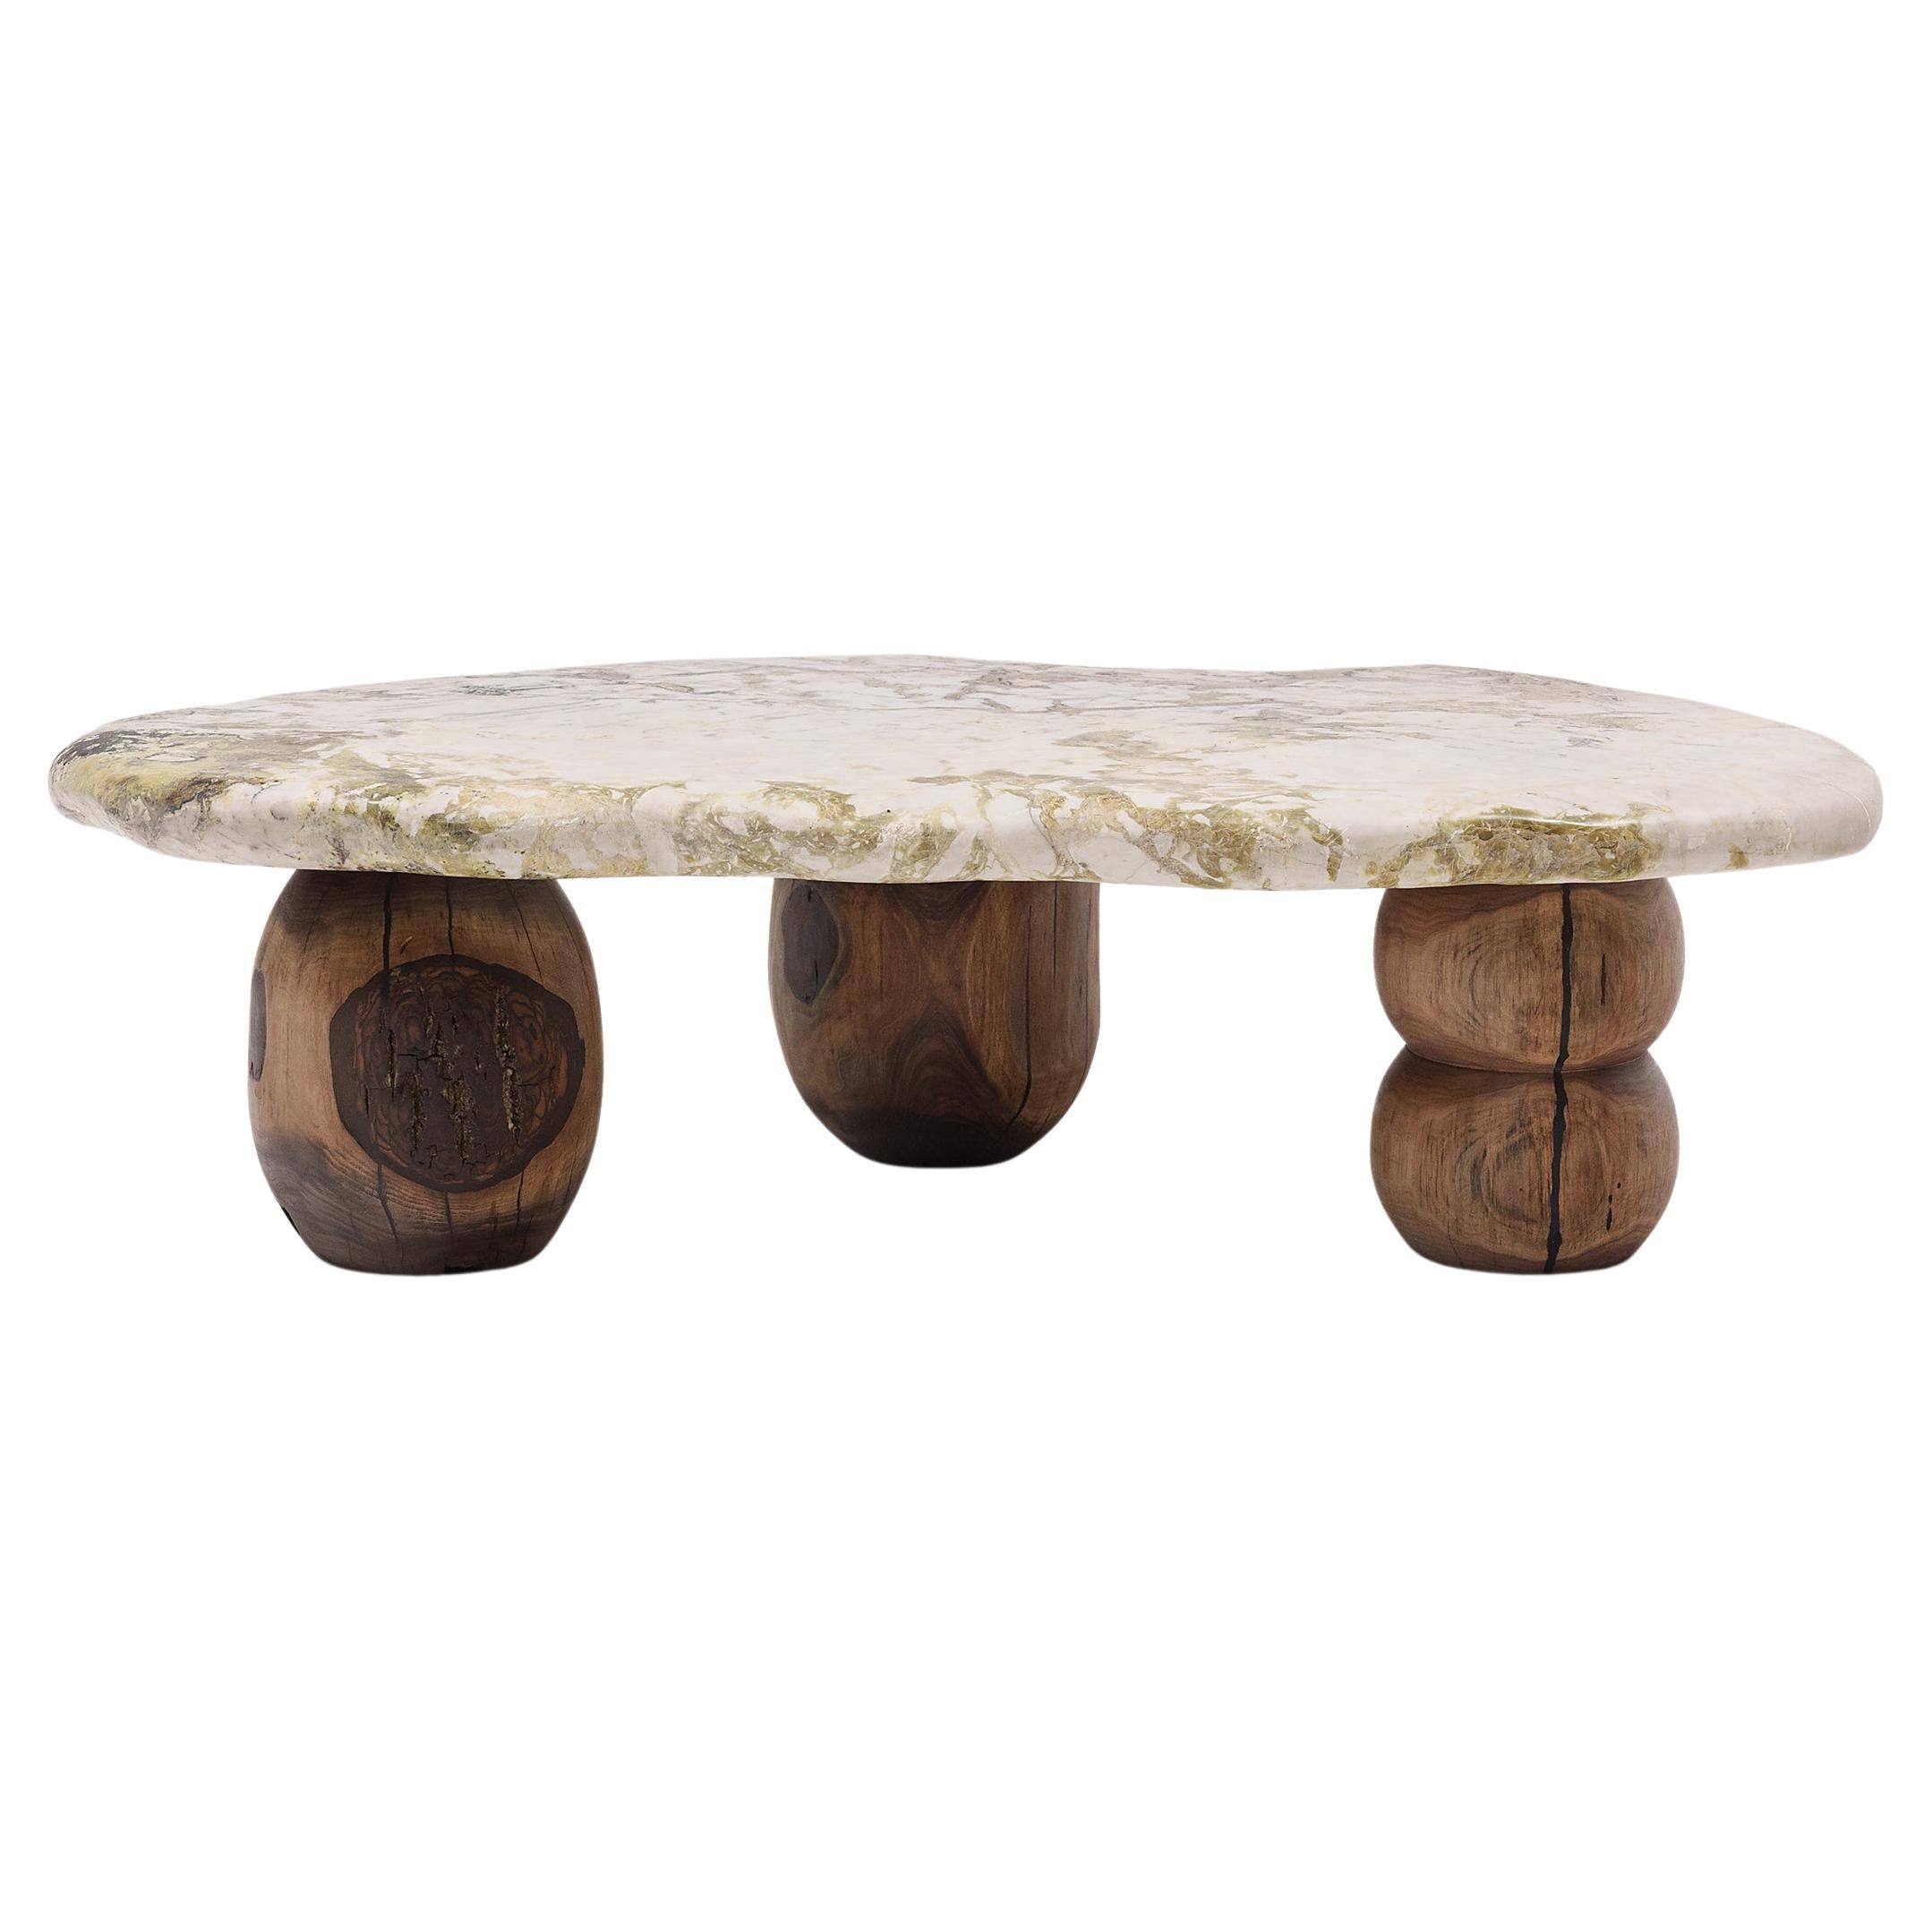 Double Gourd Meditation Stone Table